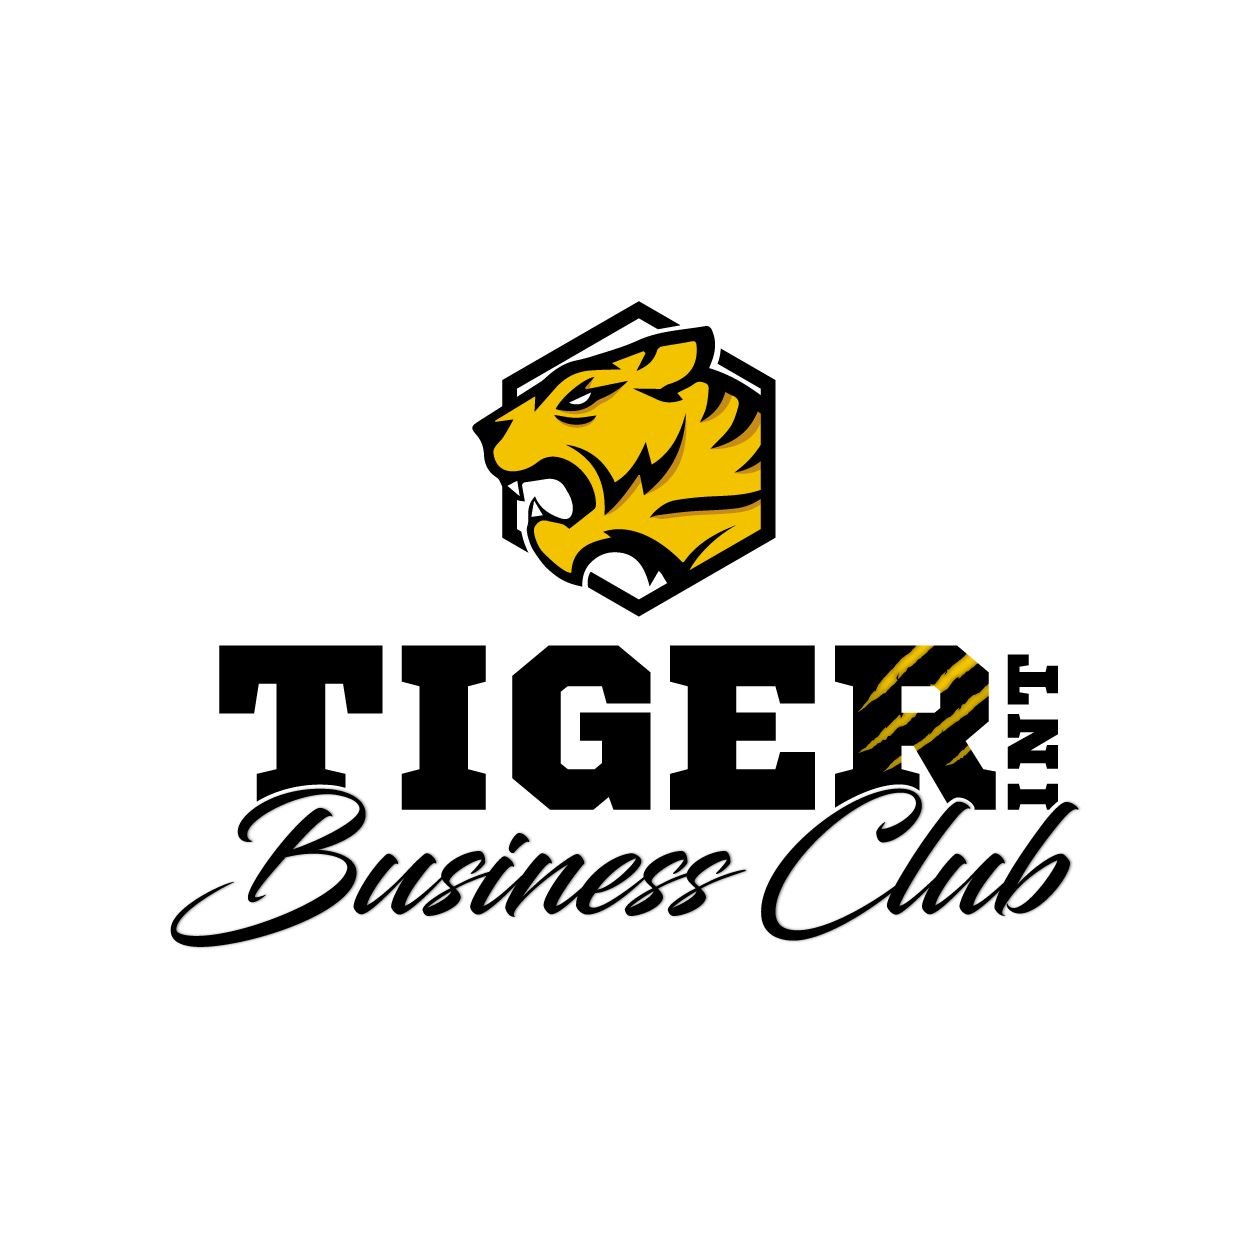 TIGER Business Club